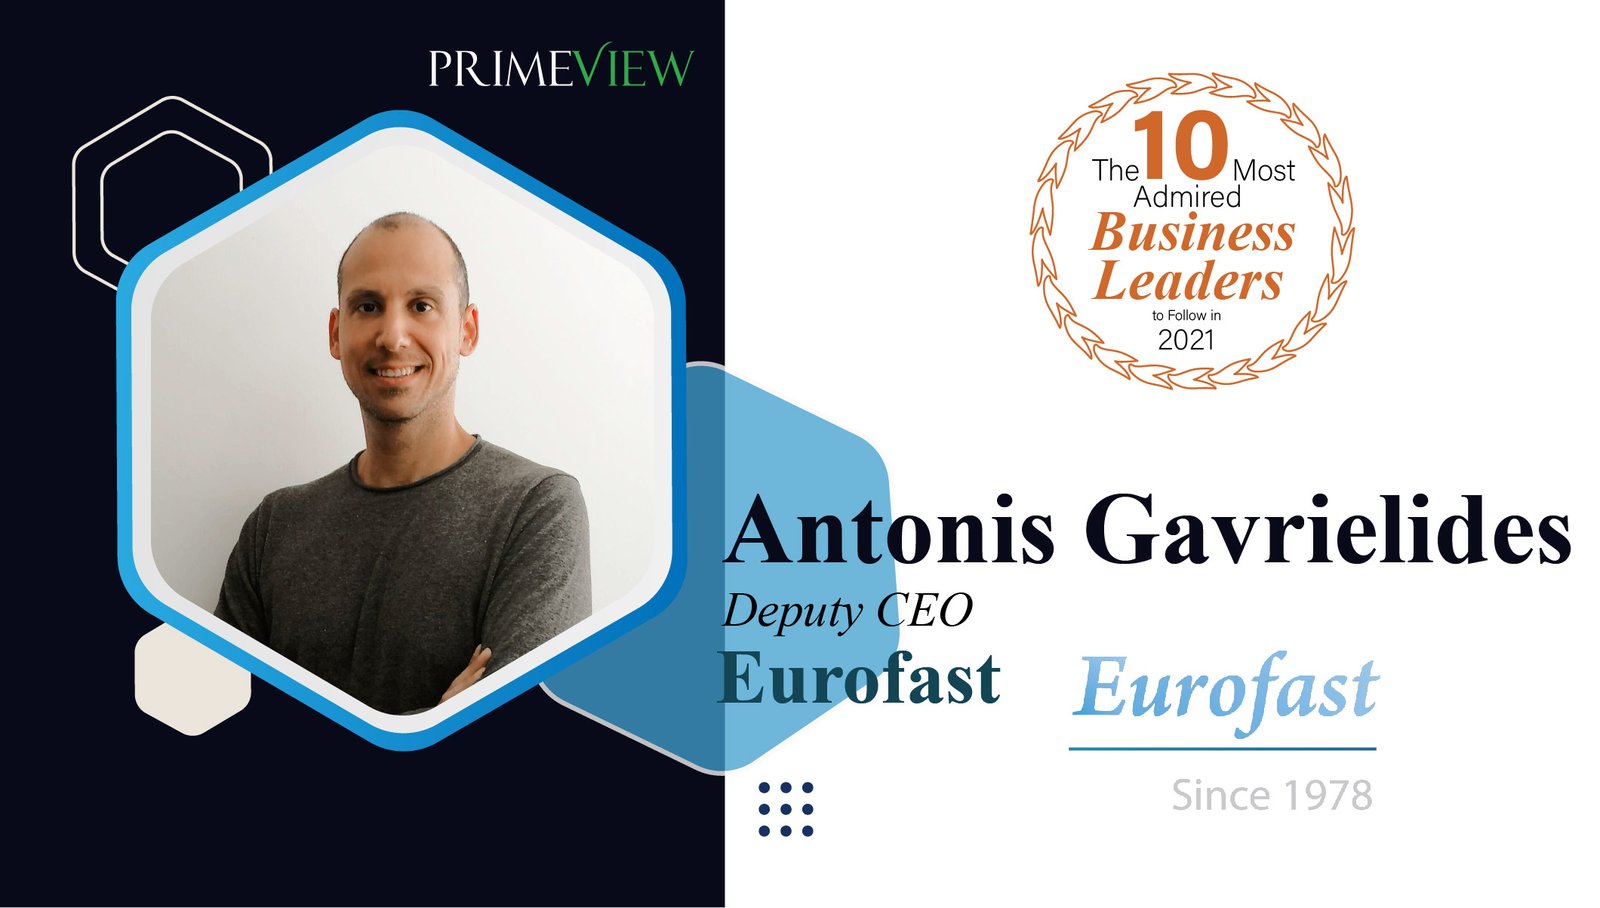 Deputy CEO | Eurofast | Antonis Gavrielides: Far-Sighted Business Leader Antonis Gavrielides is Successfully Spearheading the Eurofast International Ltd